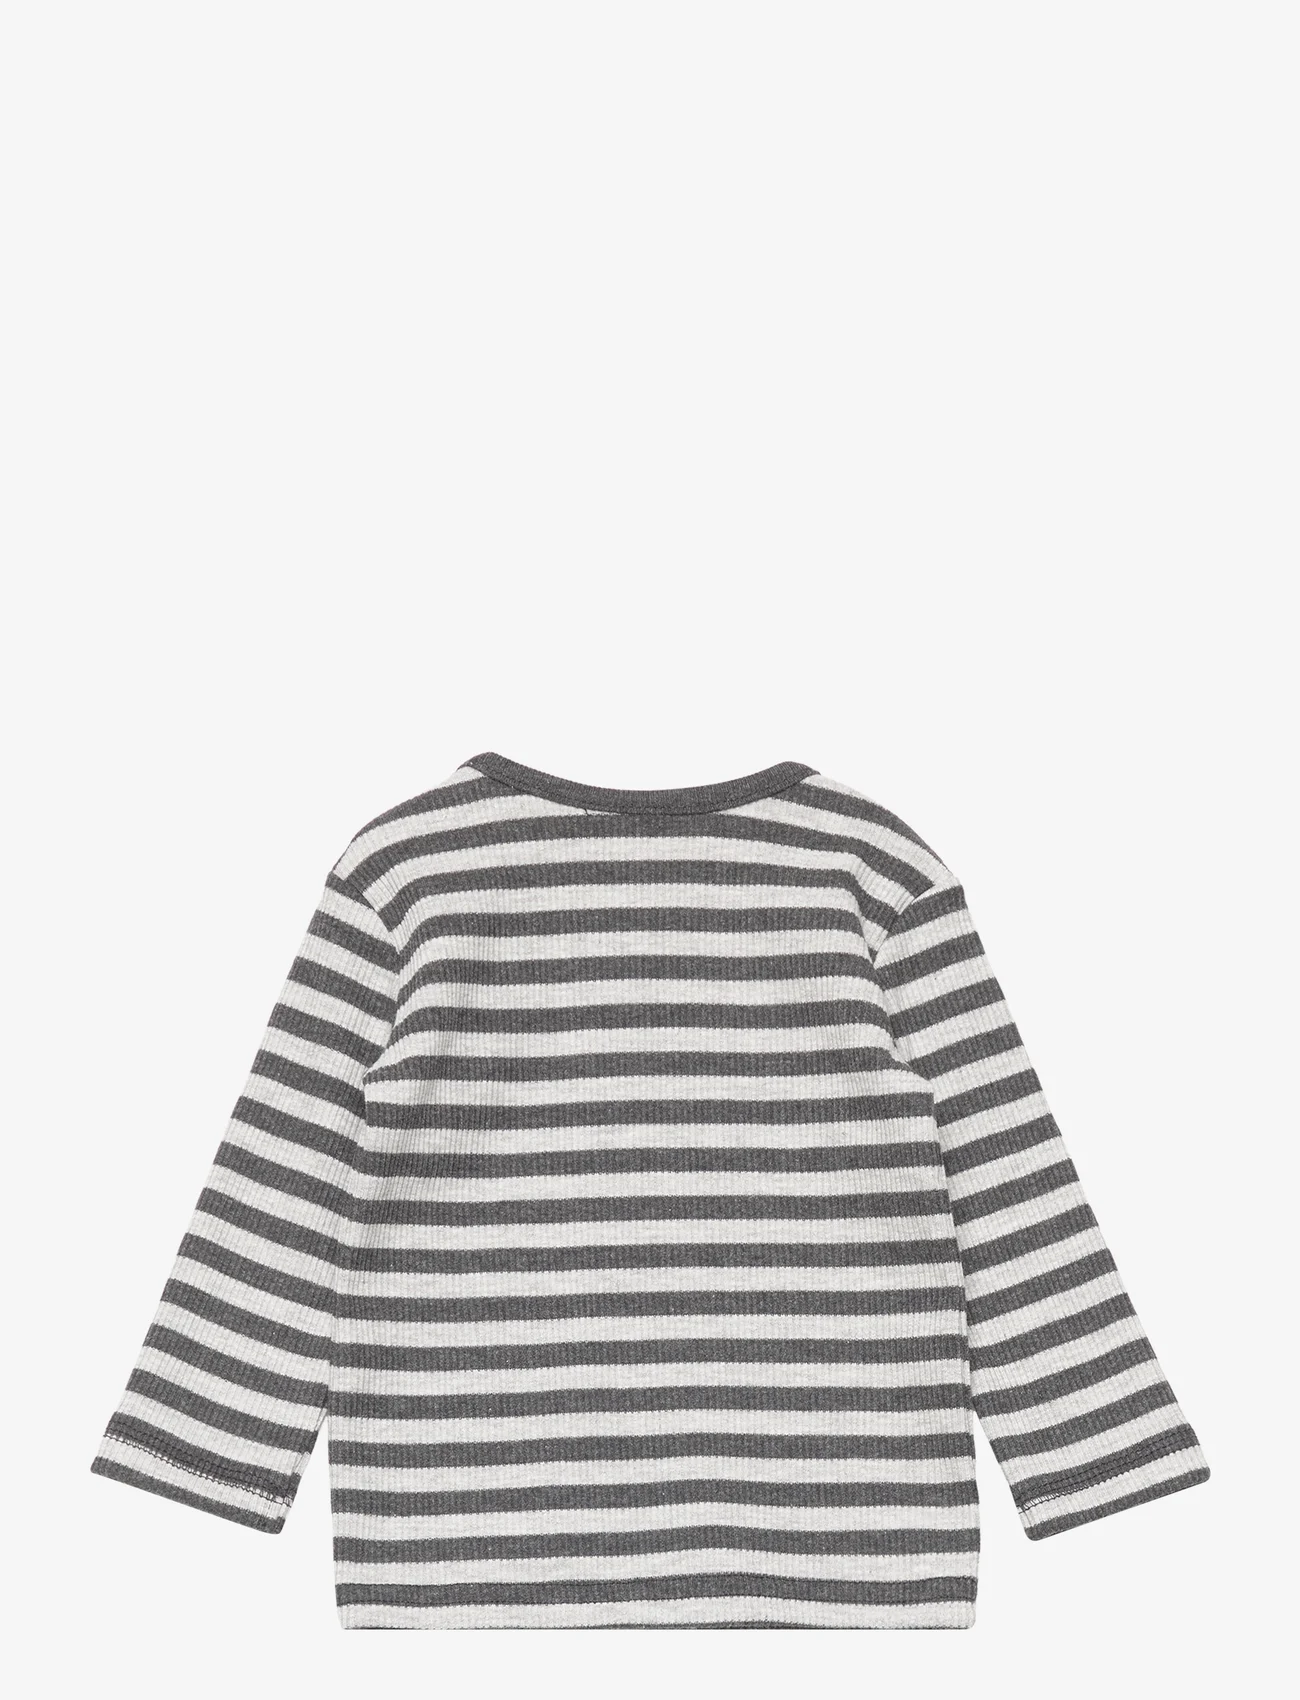 Noa Noa miniature - T-shirt - lange mouwen - light/dark grey melange - 1